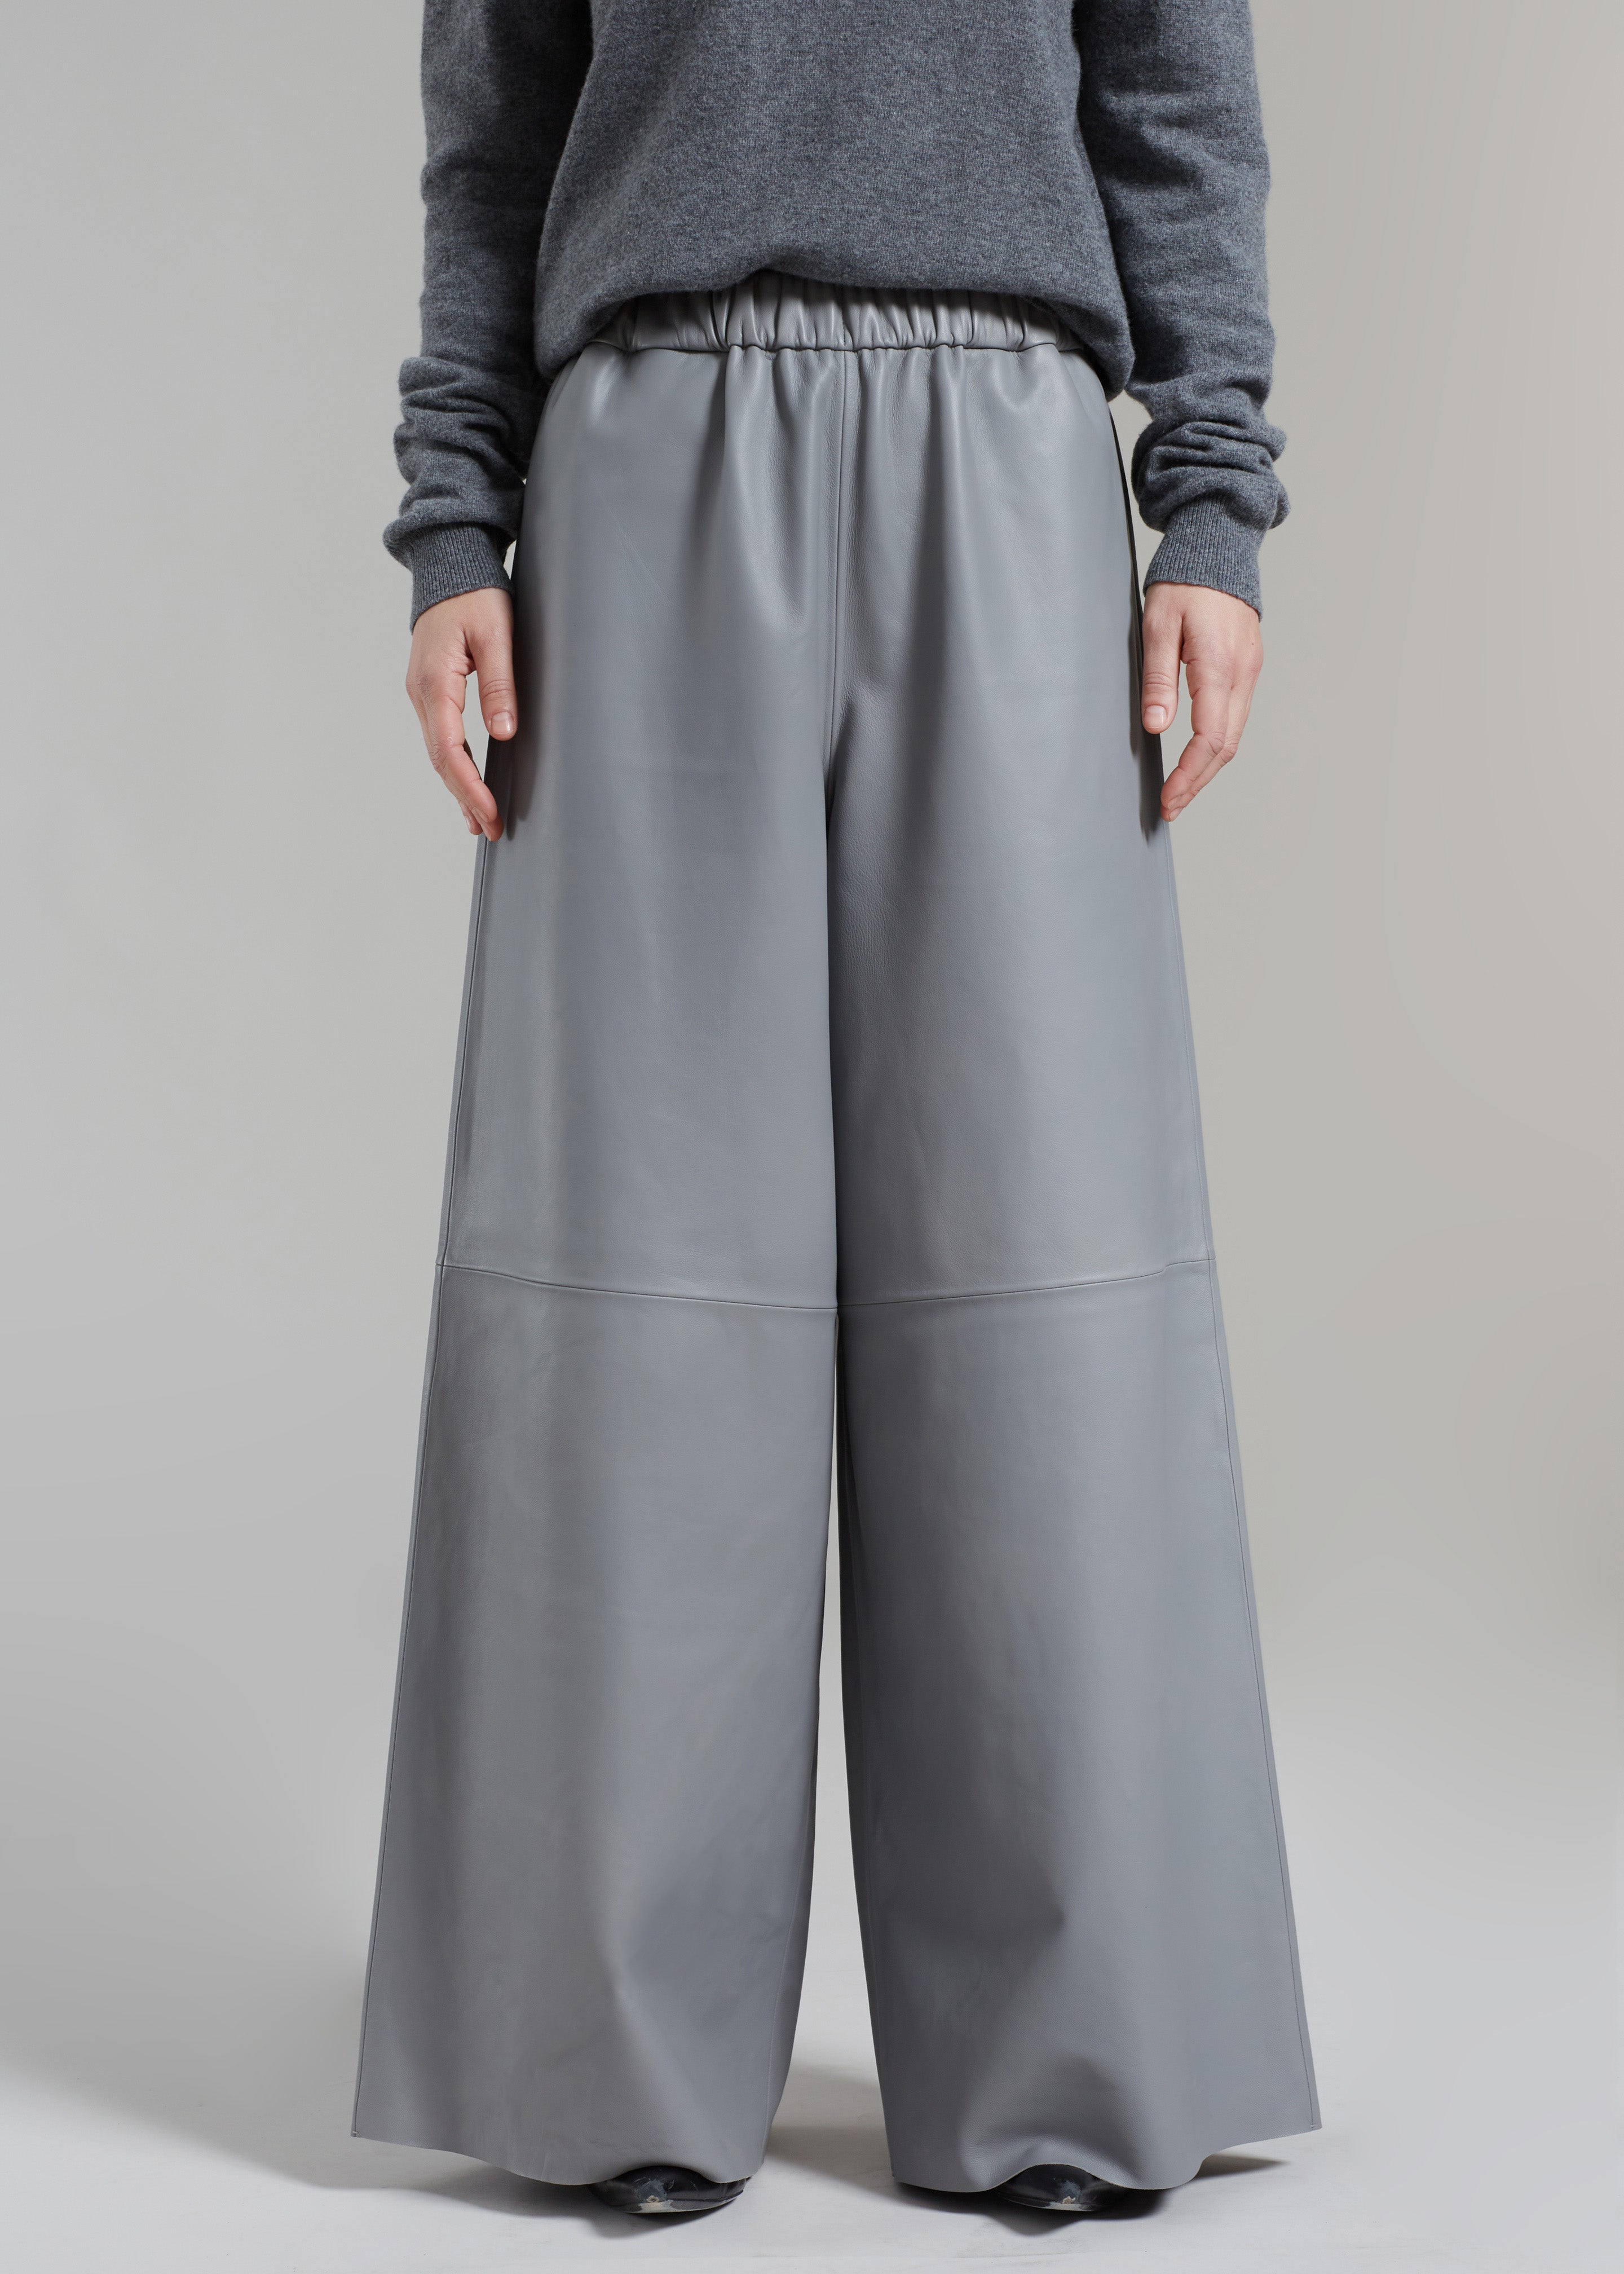 Sydney Wide Leather Pants - Grey - 6